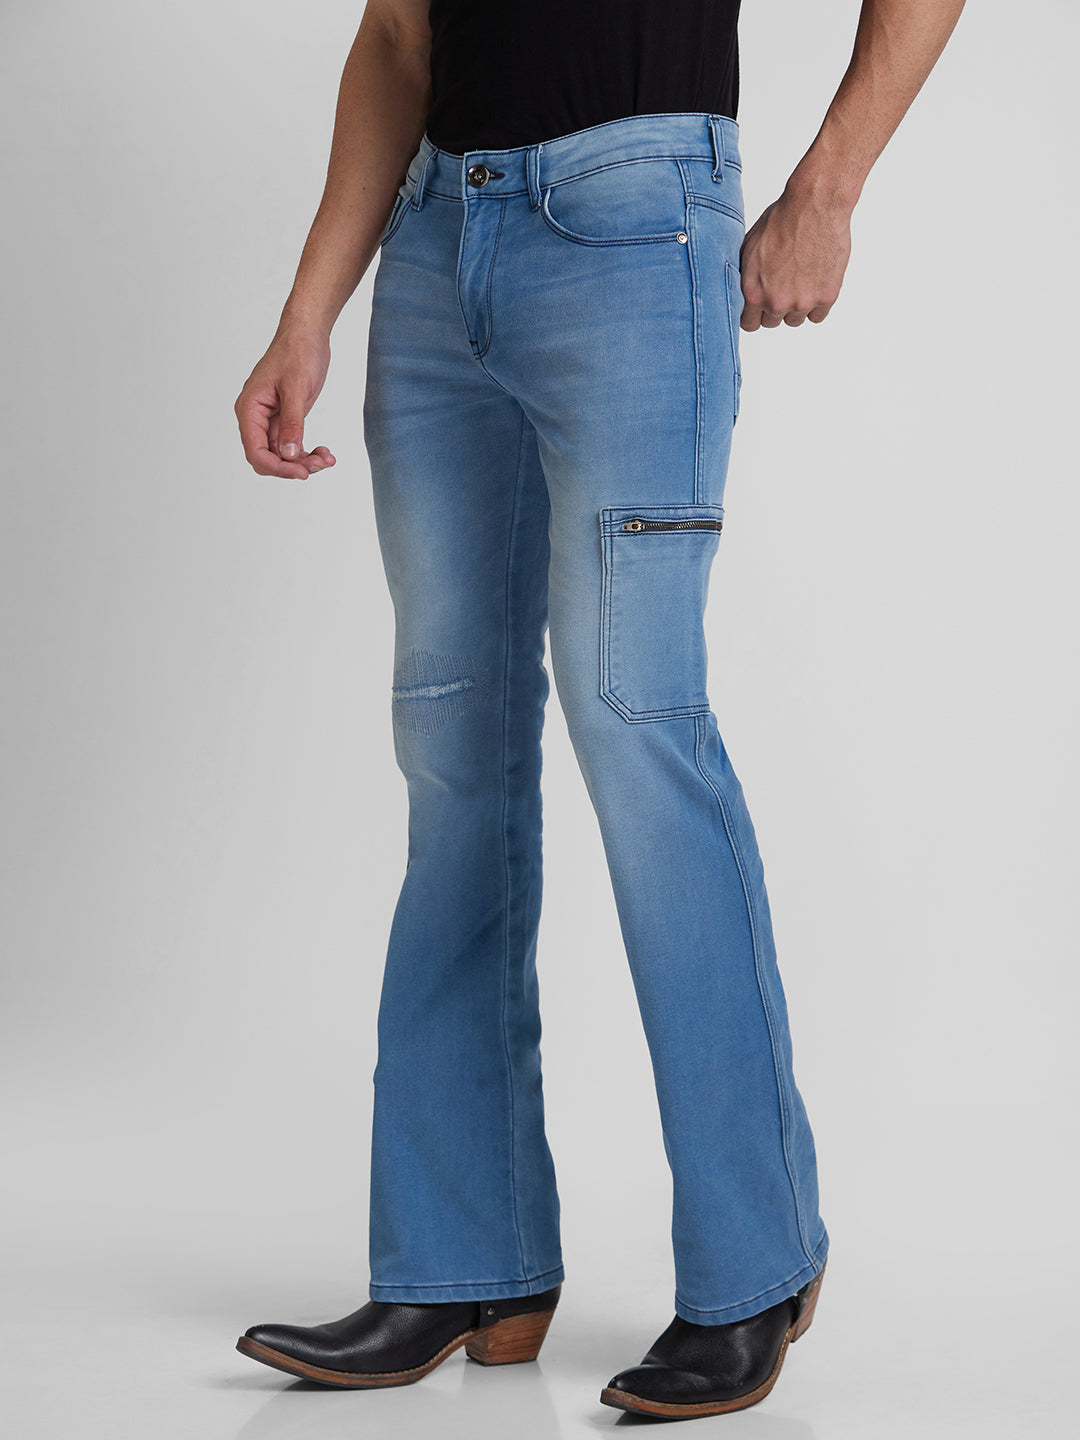 Light Blue 6 Pocket Distressed Bootcut Jeans